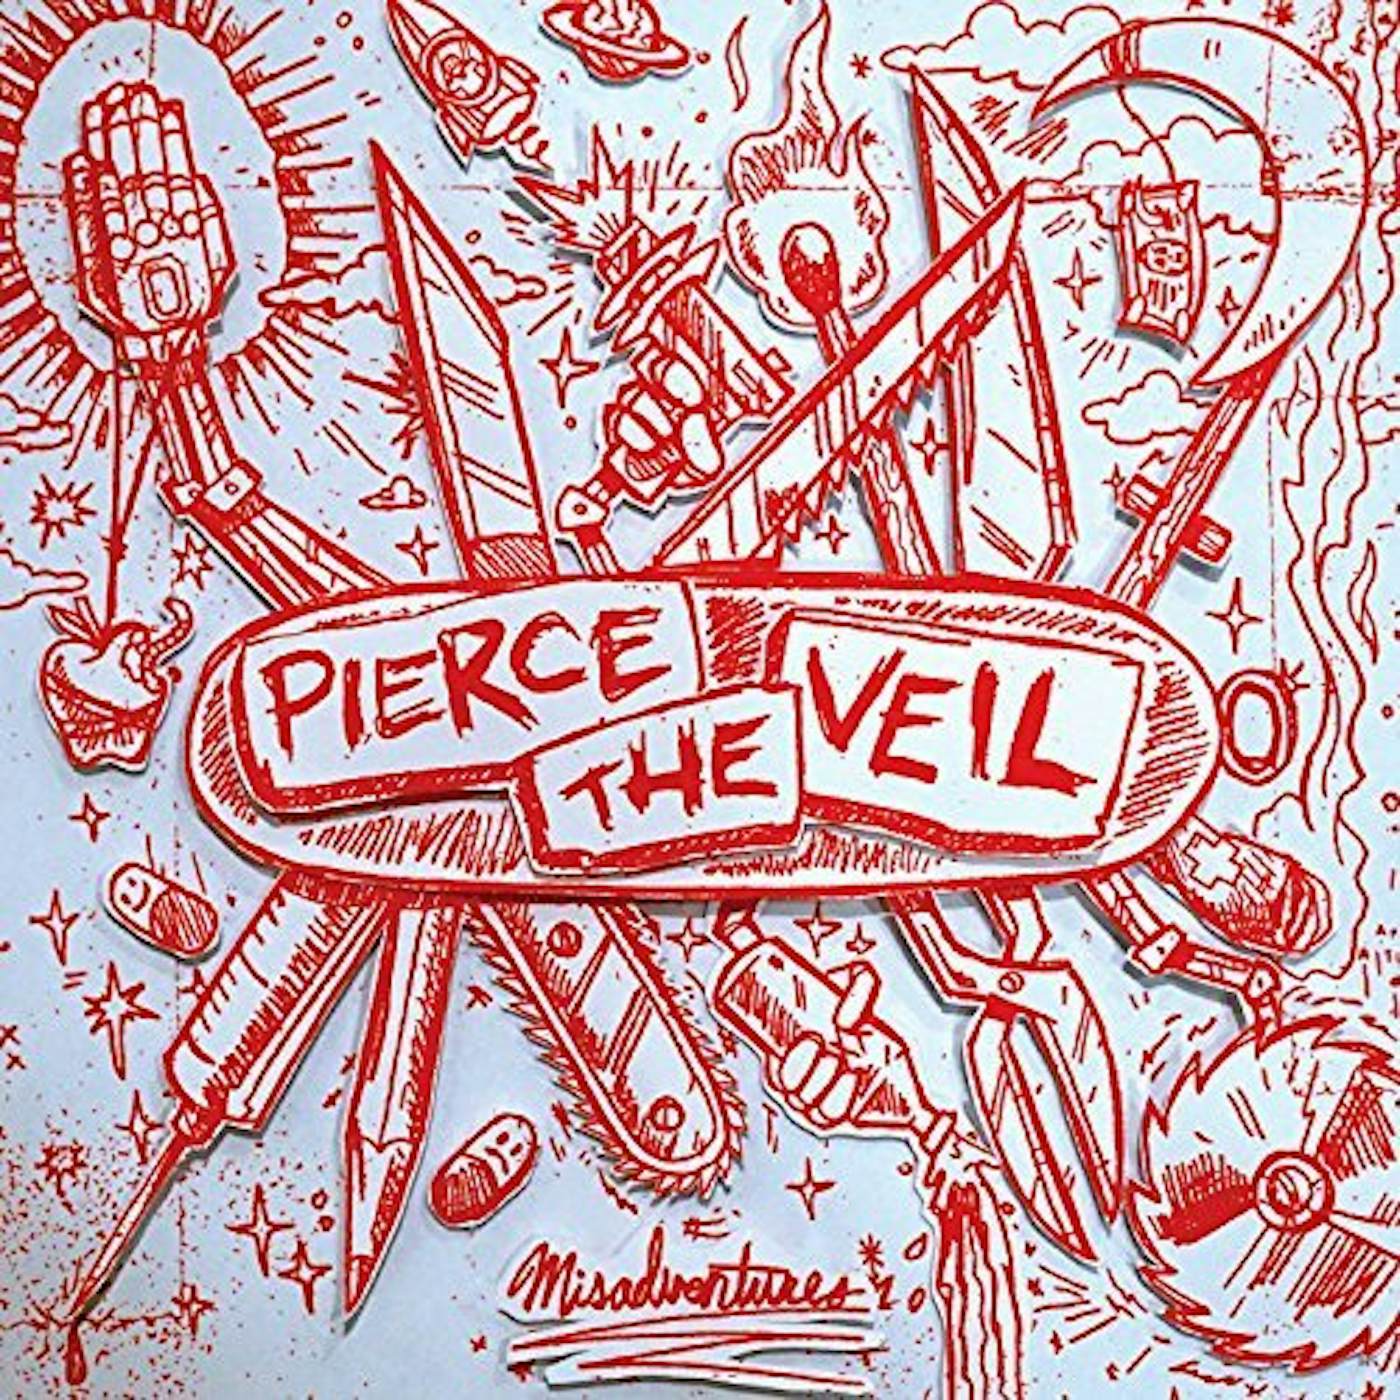 Pierce The Veil Misadventures (White) Vinyl Record